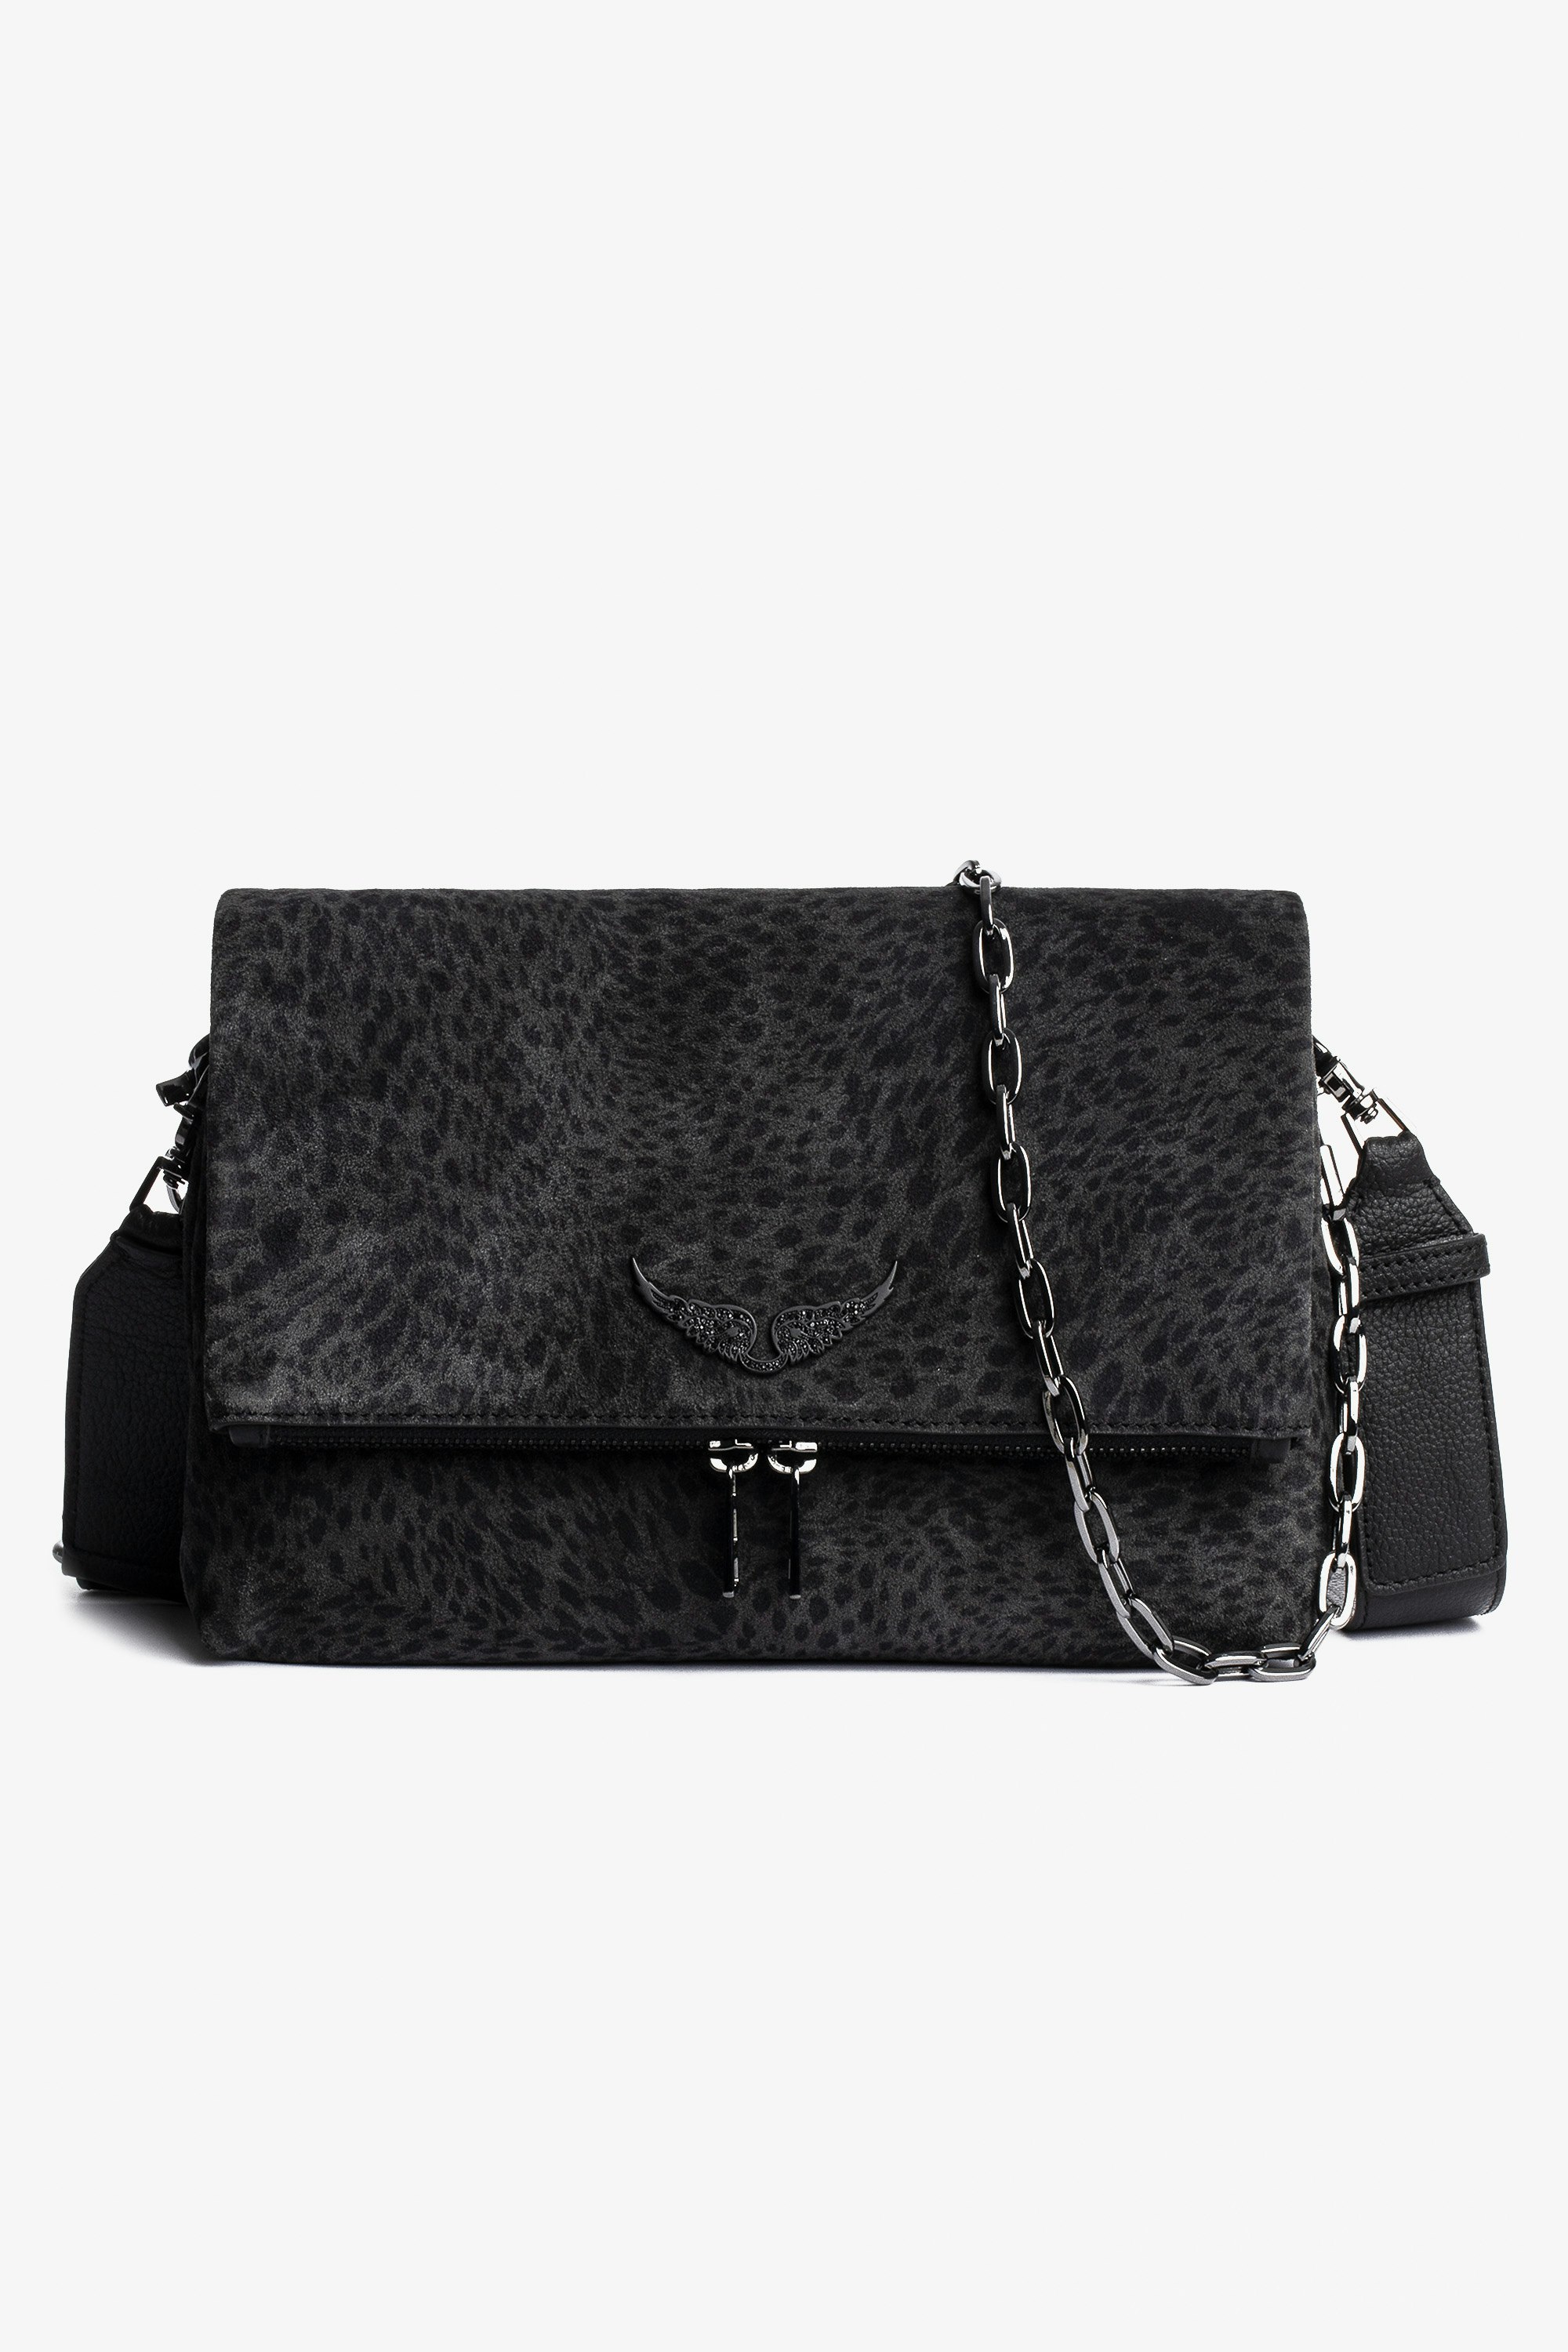 Rock Leo Suede Bag Women's black suede shoulder bag in leopard print